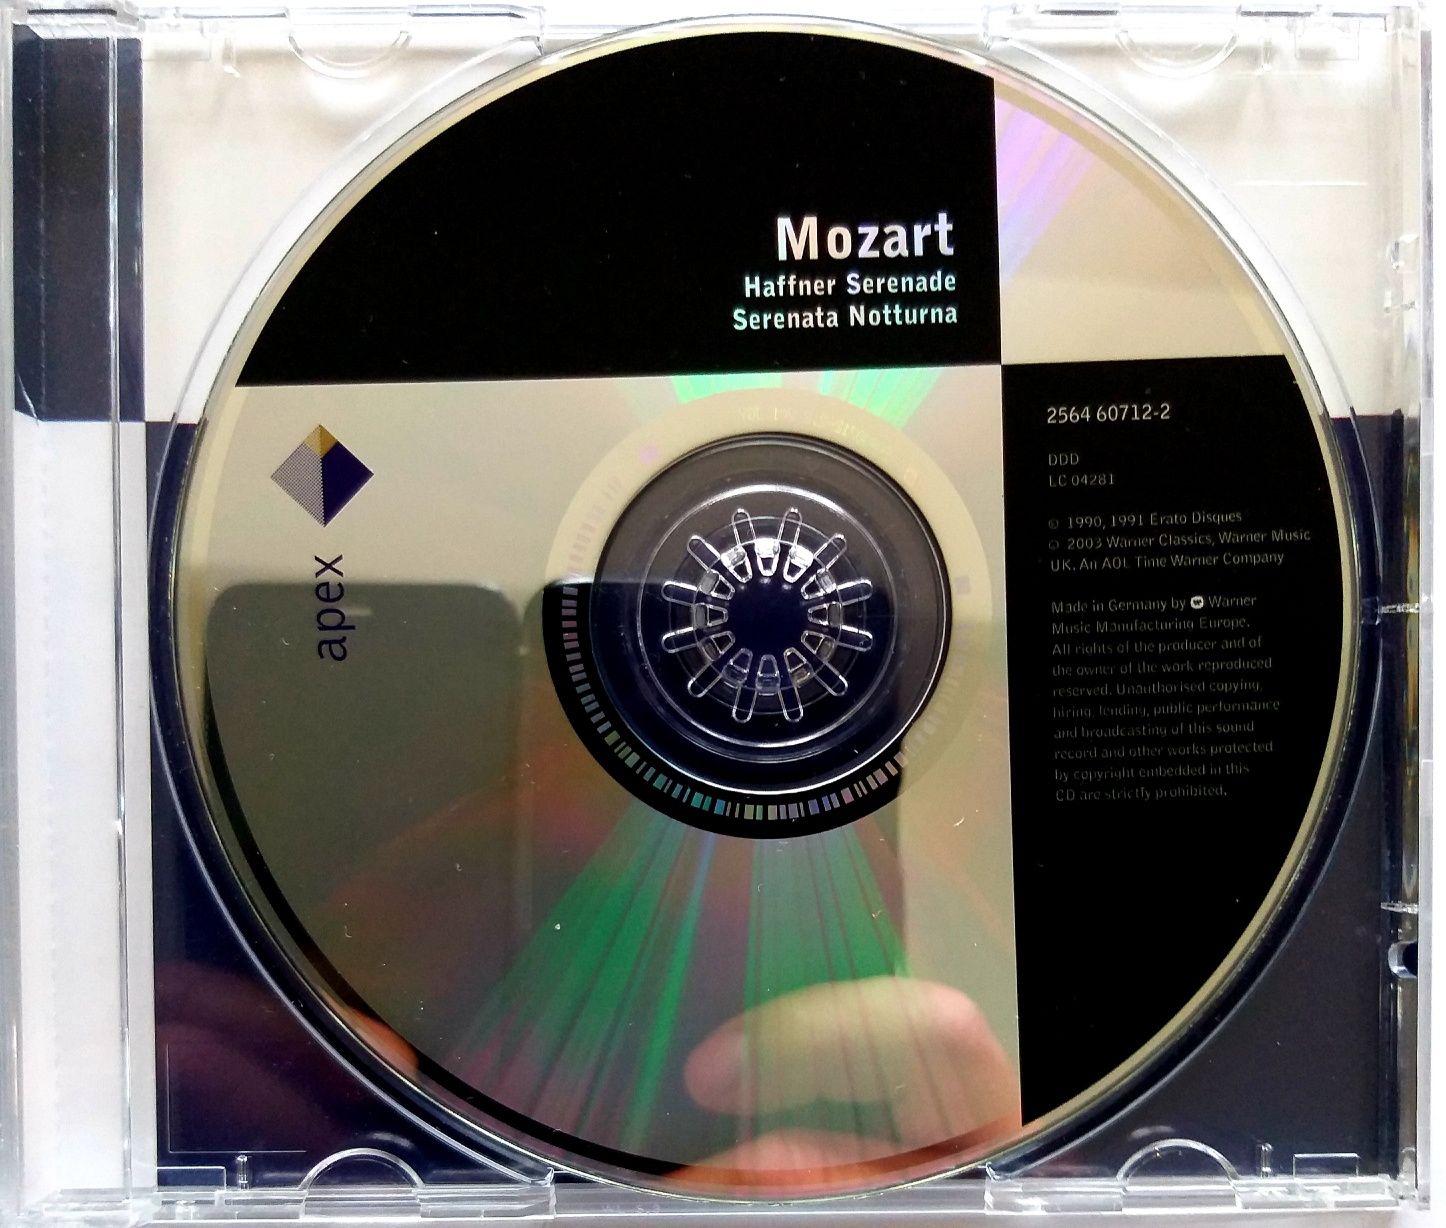 Mozart Haffner Serenade Serenata Notturia 2003r